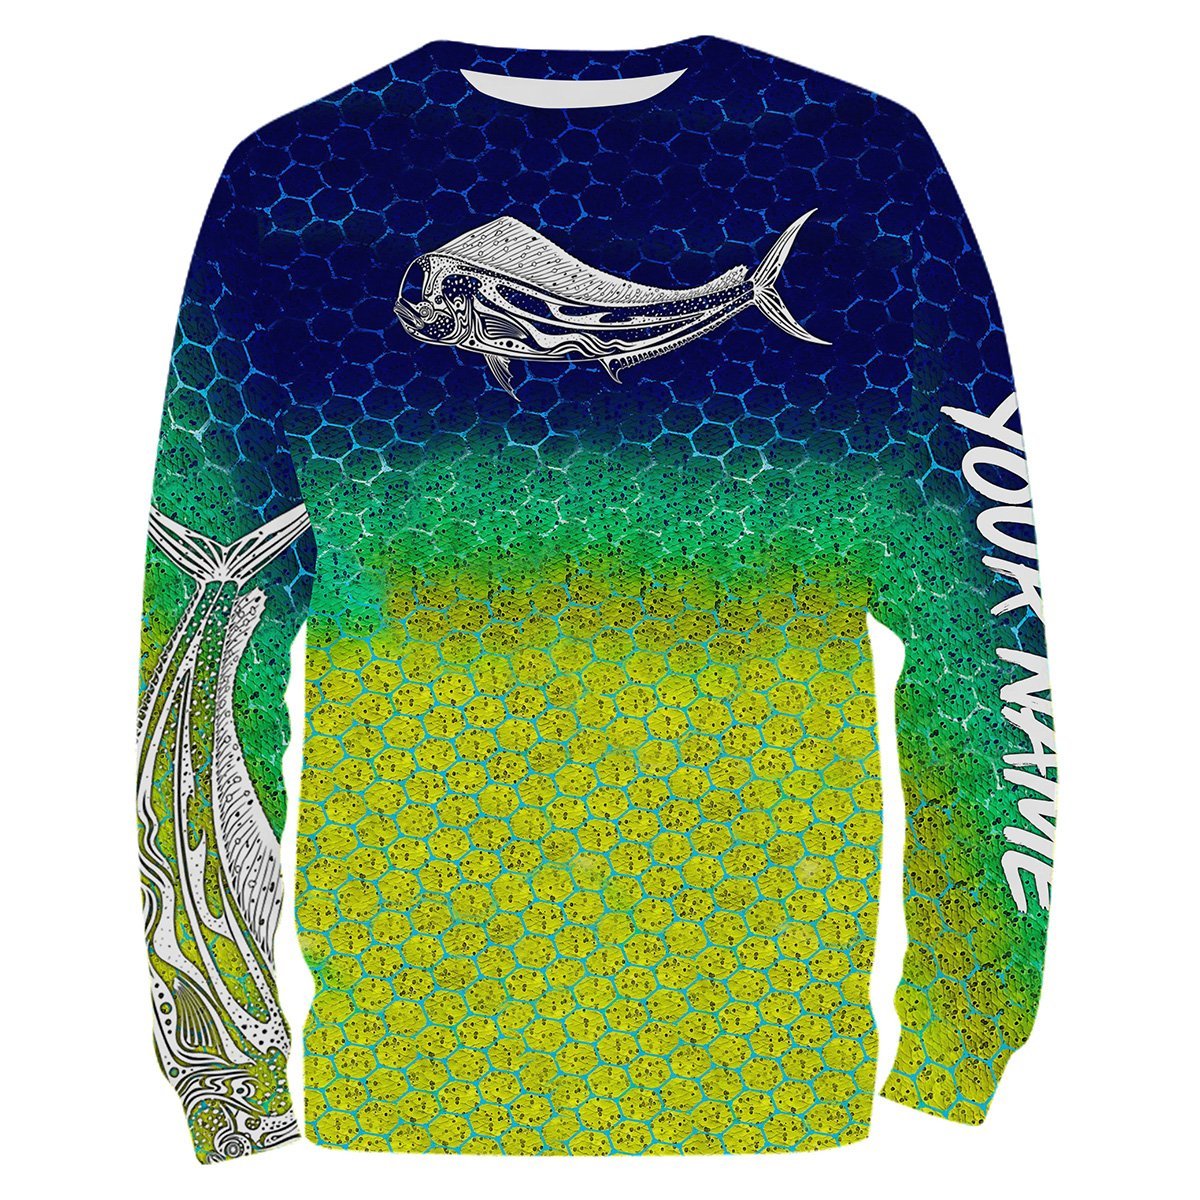 Mahi Mahi ( Dorado) Fishing Skin 3D All Over print shirts